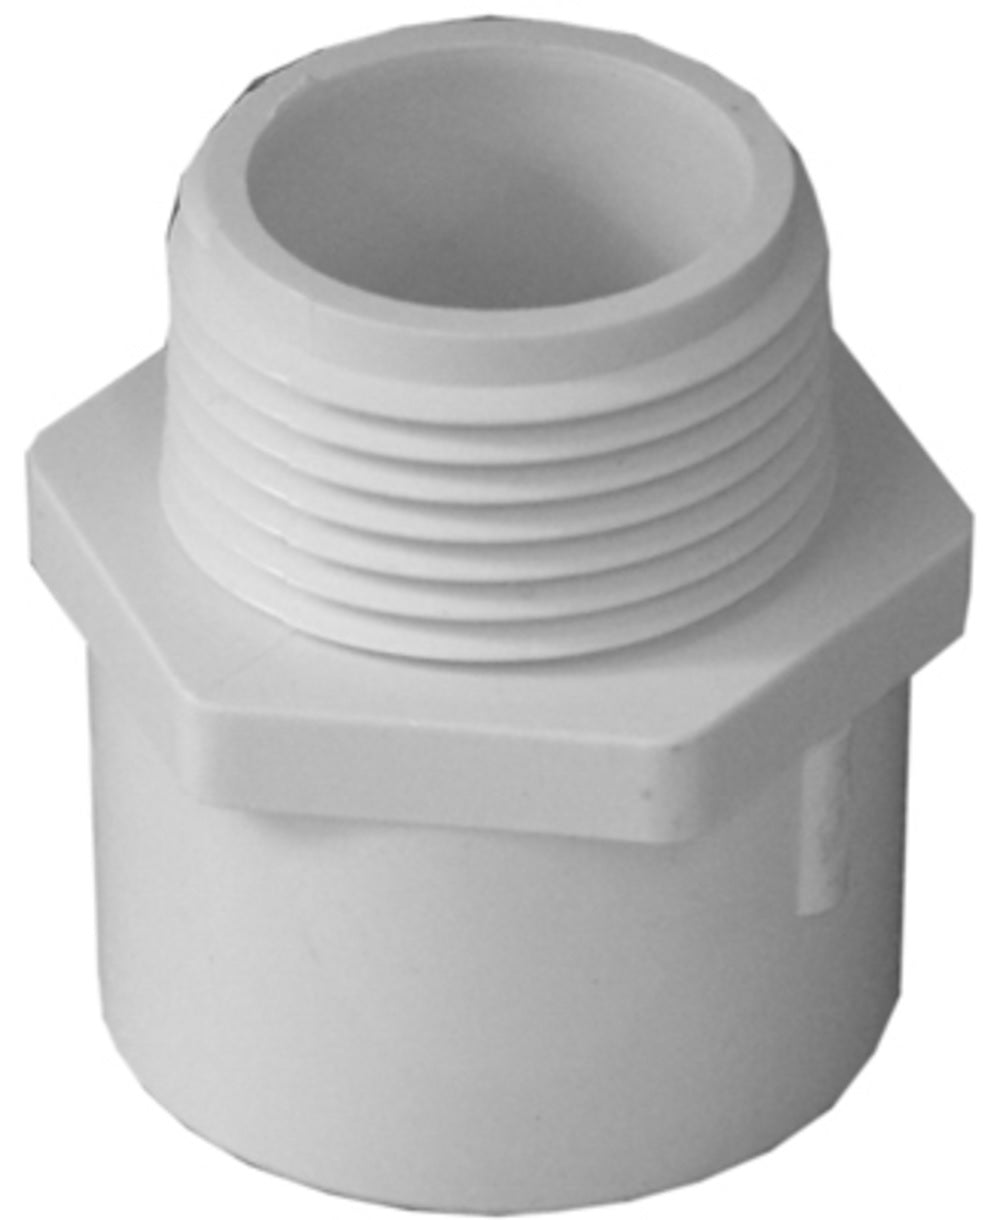 Charlotte Pipe PVC 02110 0900HA Pressure PVC Reducing Male Adapter, White